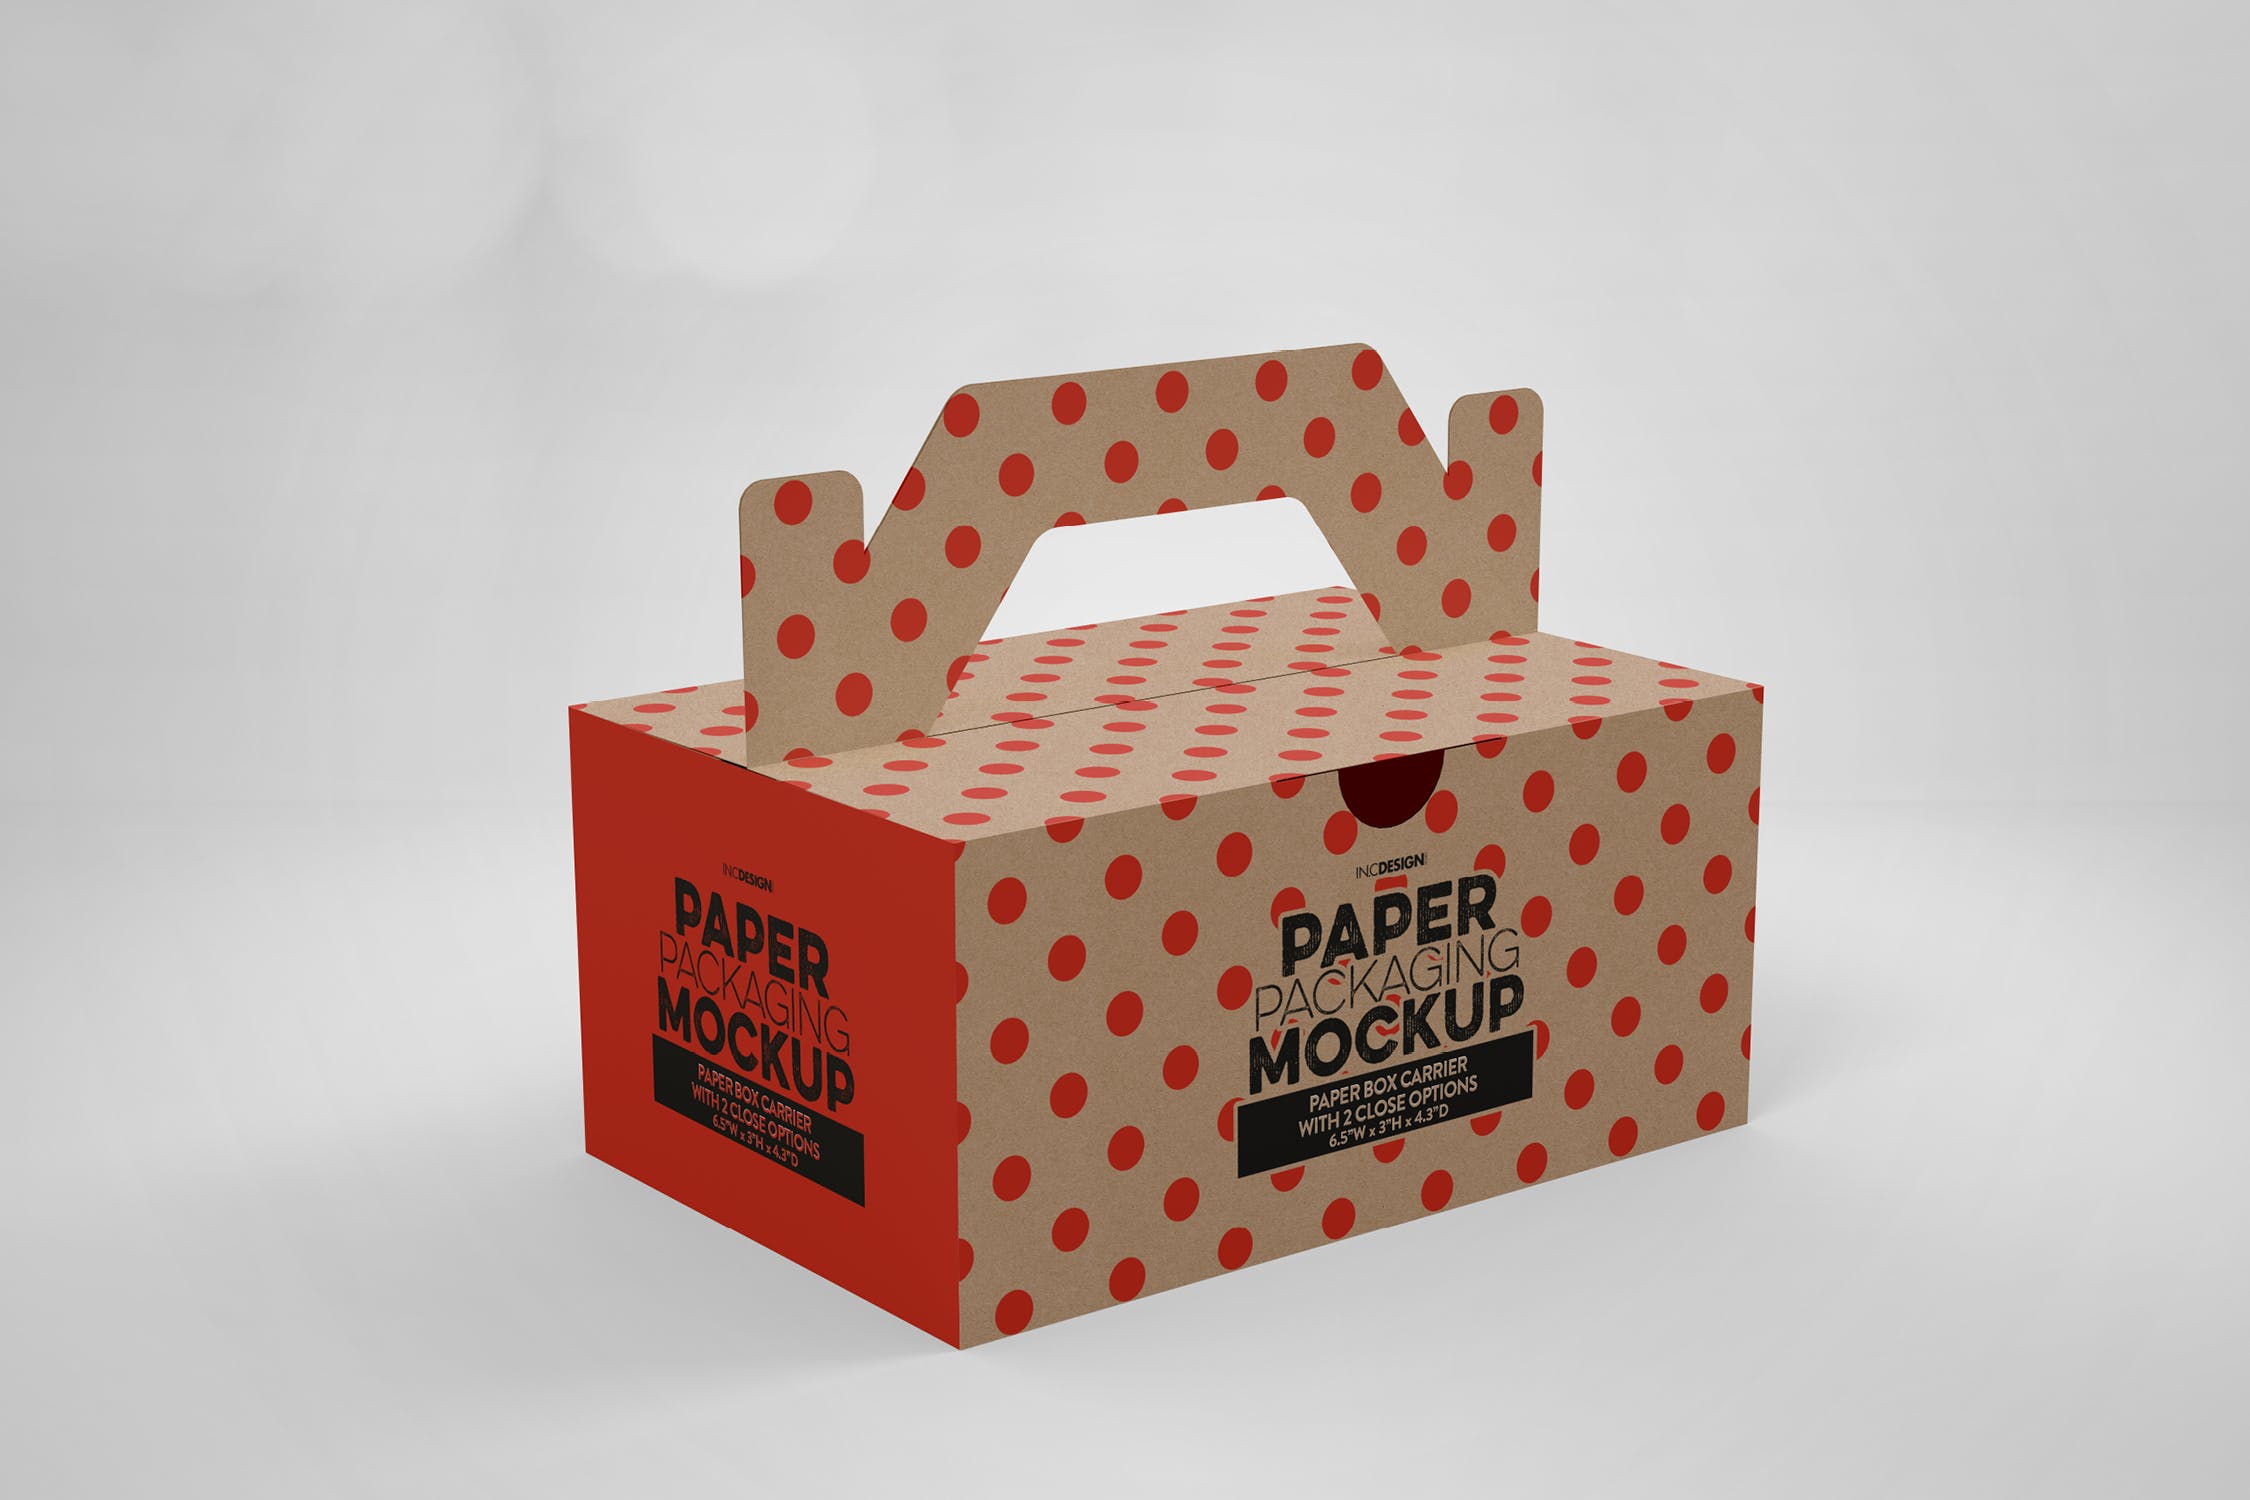 产品包装纸箱设计效果图样机 Paper Carrier with 2 Closure Options插图(2)